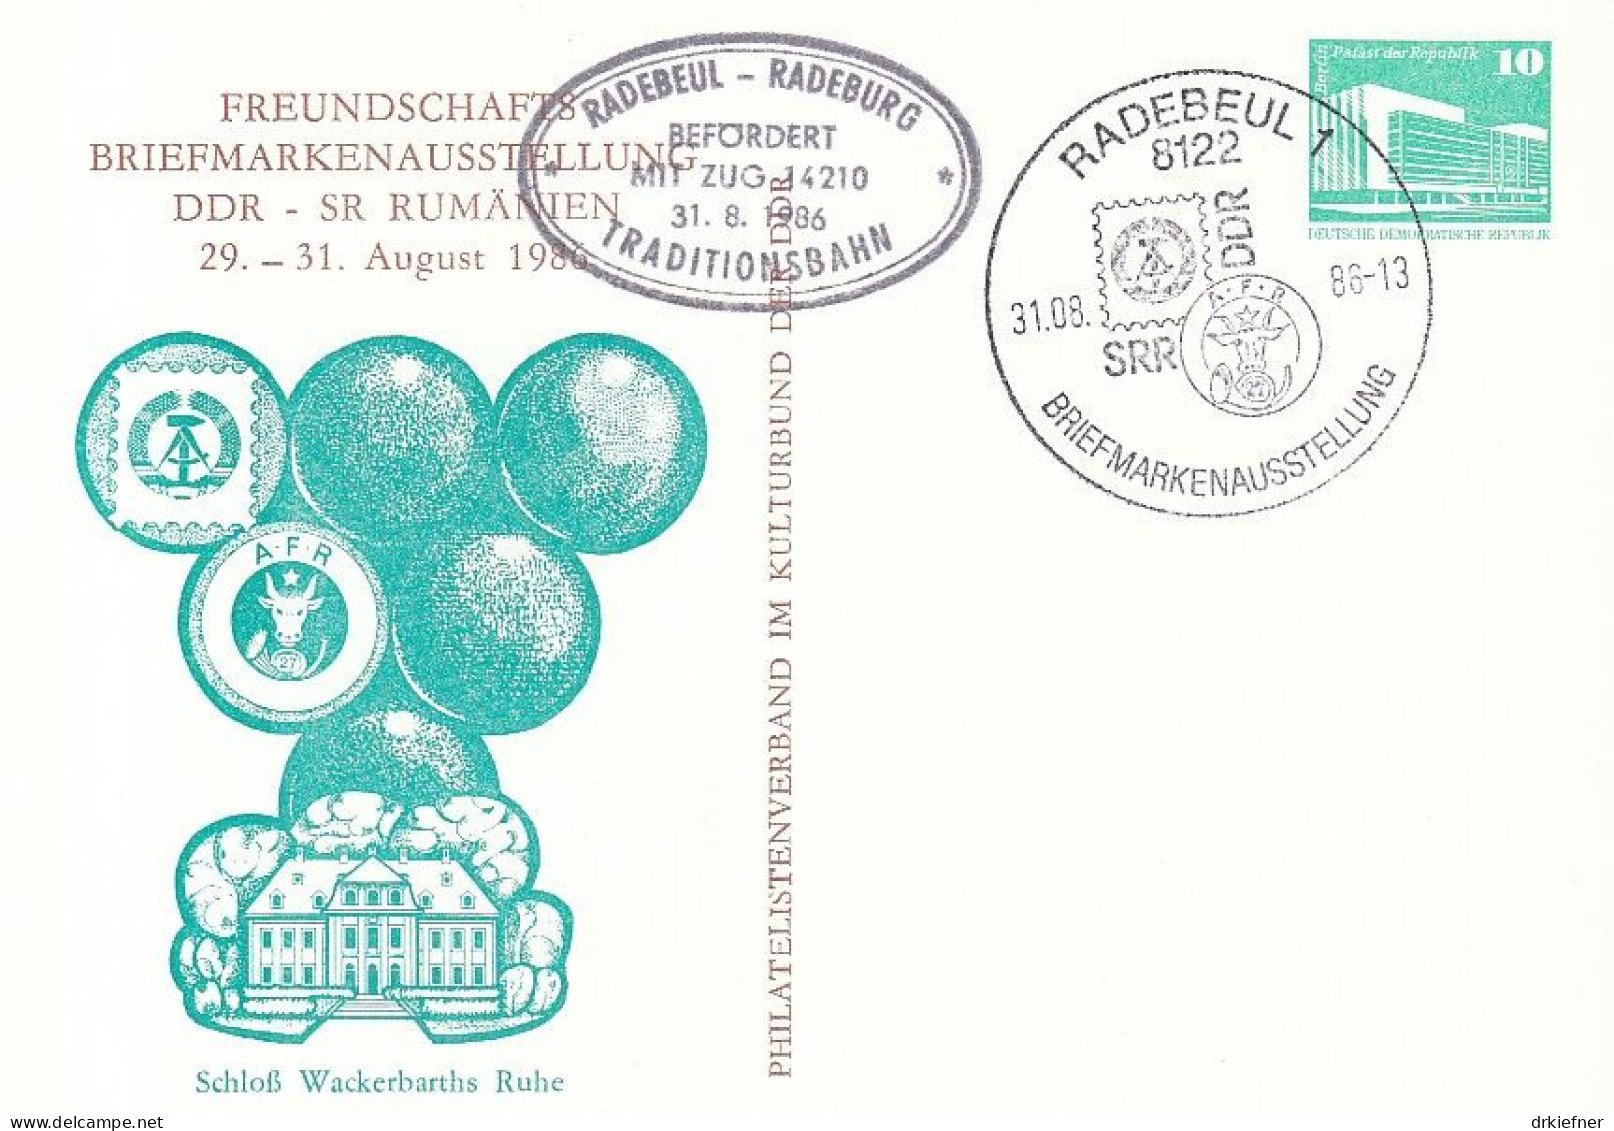 DDR PP 18, Gebraucht, SoSt: Radebeul, Briefmarkenausstellung DDR-Rumänien 1986, Bahnpost Radebeul-Radeburg - Private Postcards - Used